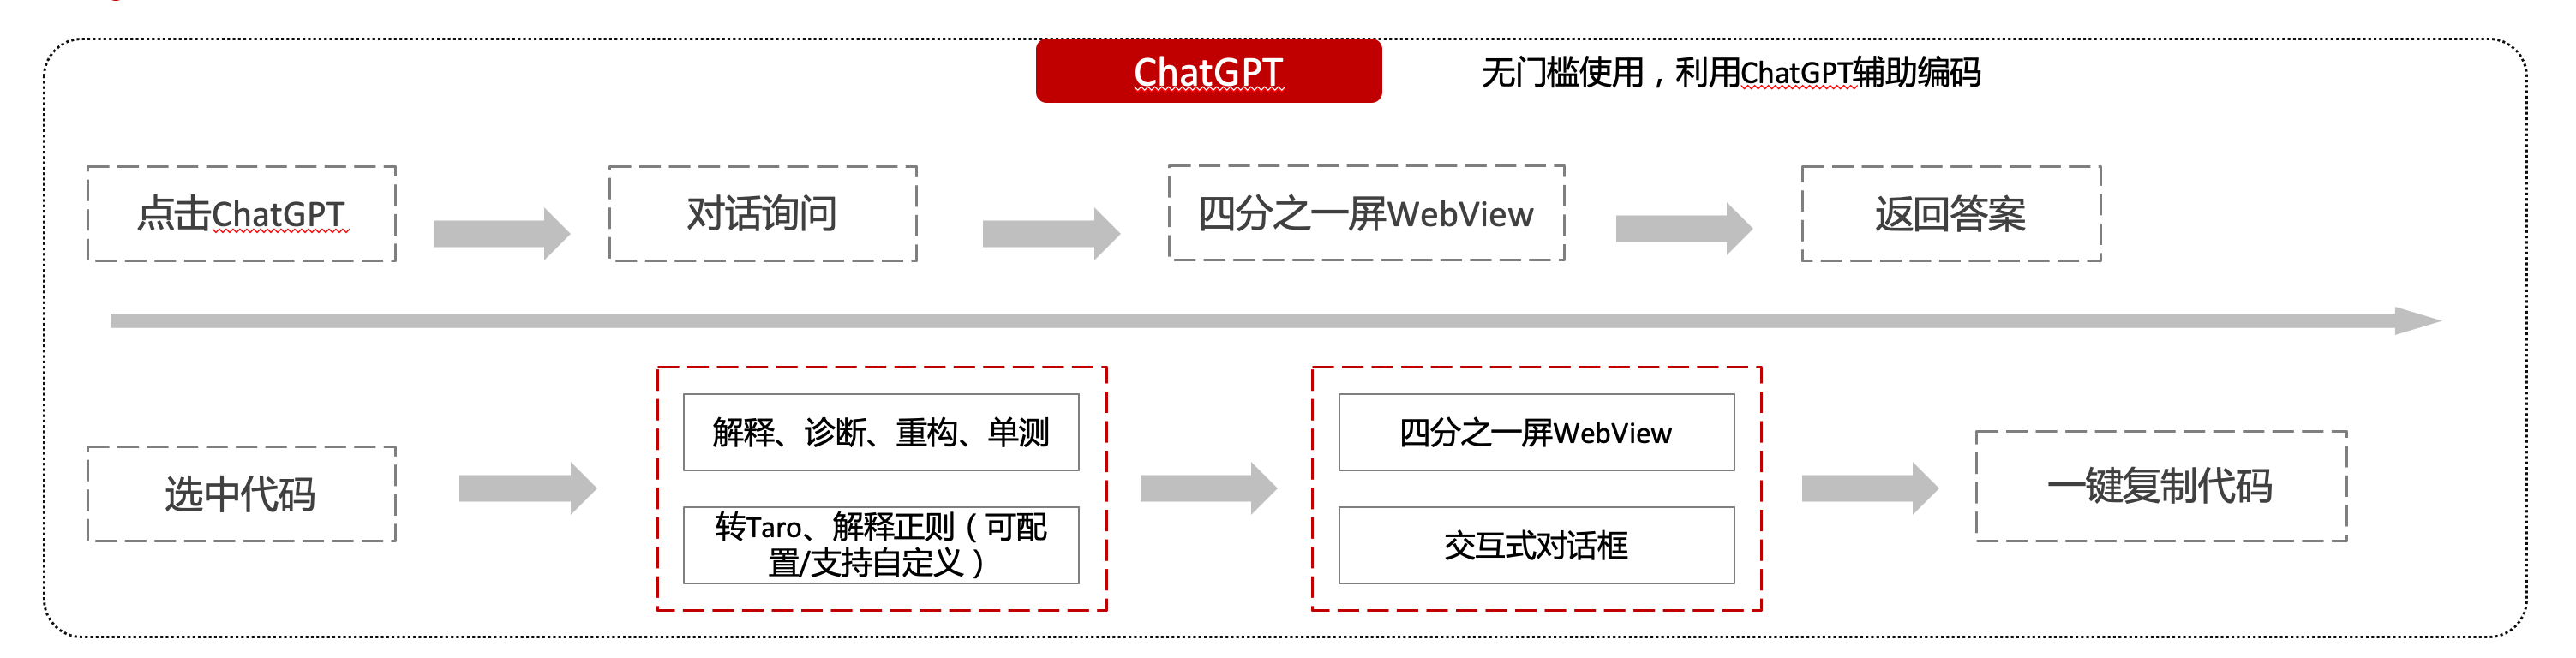 ChatGPT的原理与前端领域实践 | 京东云技术团队